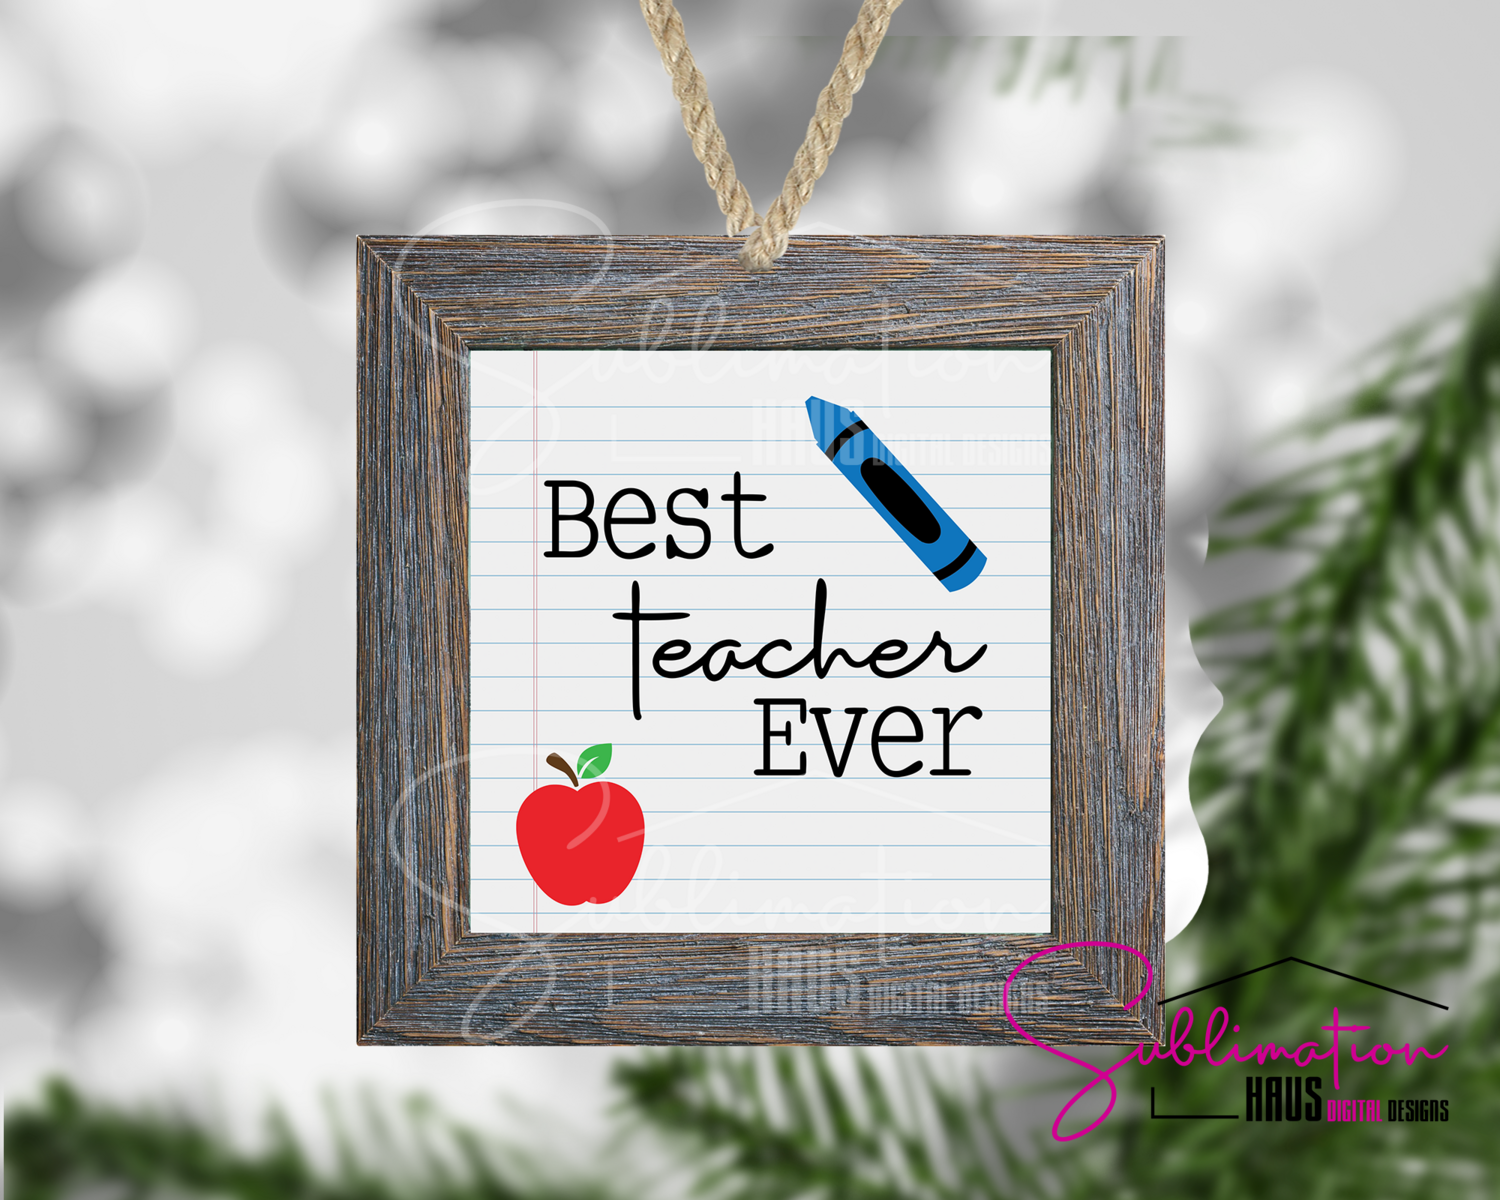 Best Teacher Ever - Winter Holiday Frame Ornament